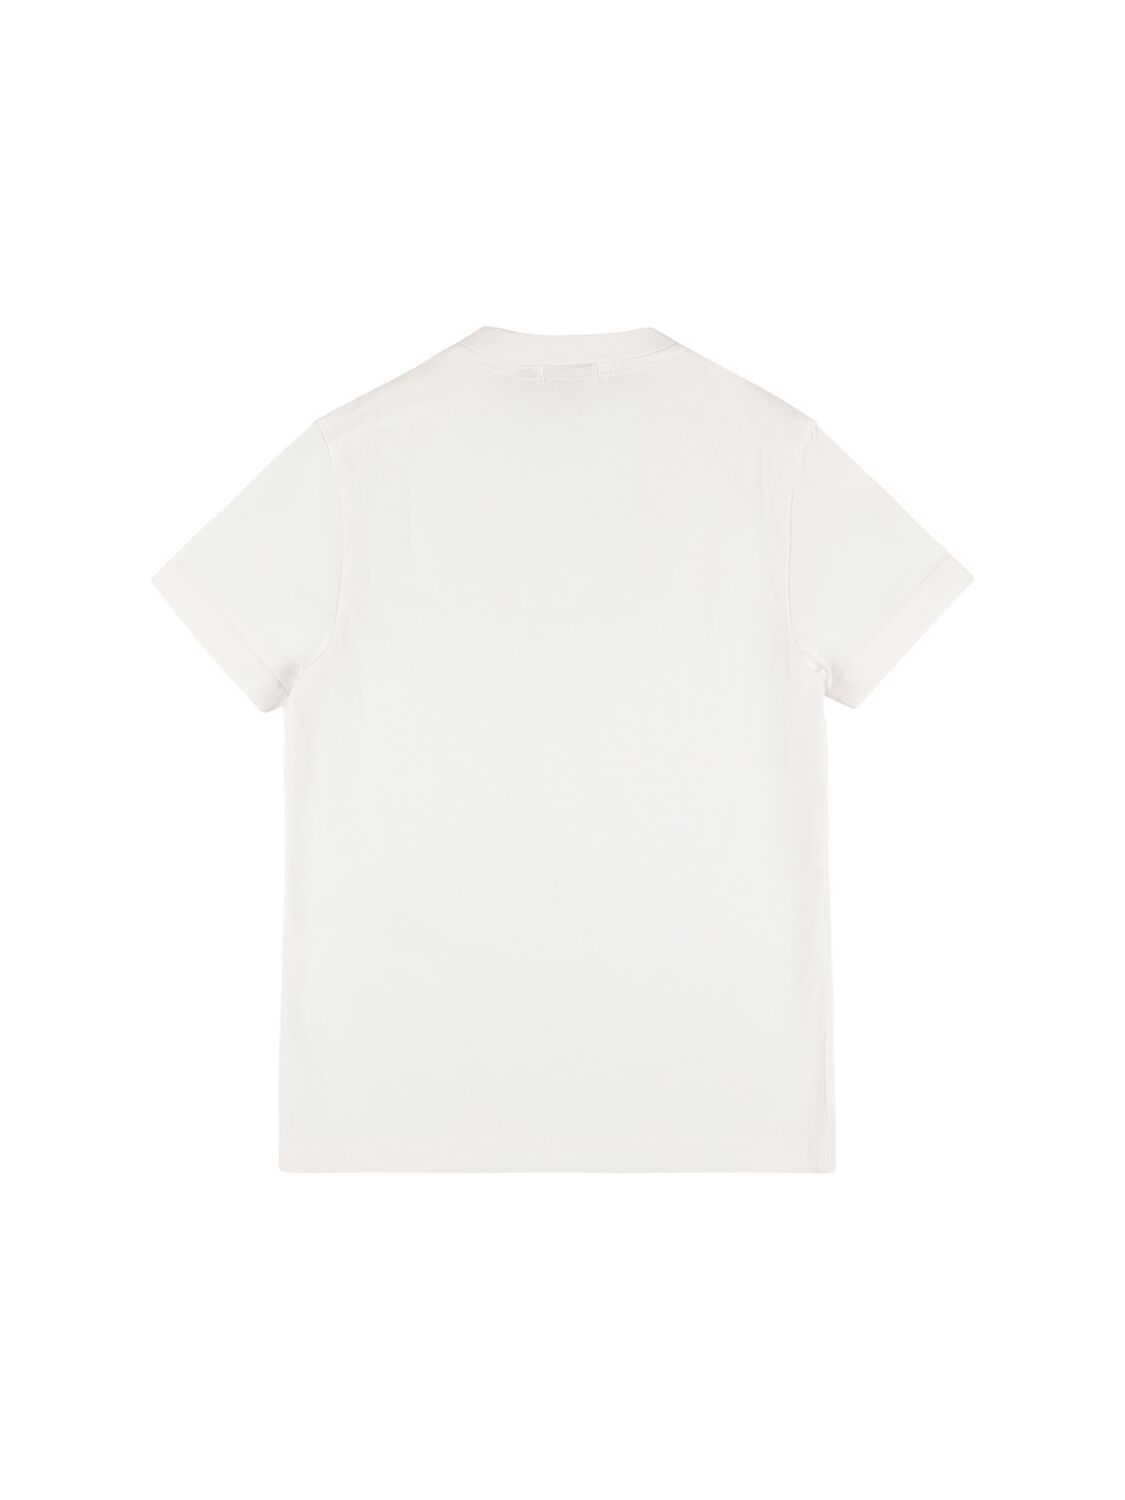 Shop Aspesi Printed Logo Cotton Jersey T-shirt In White